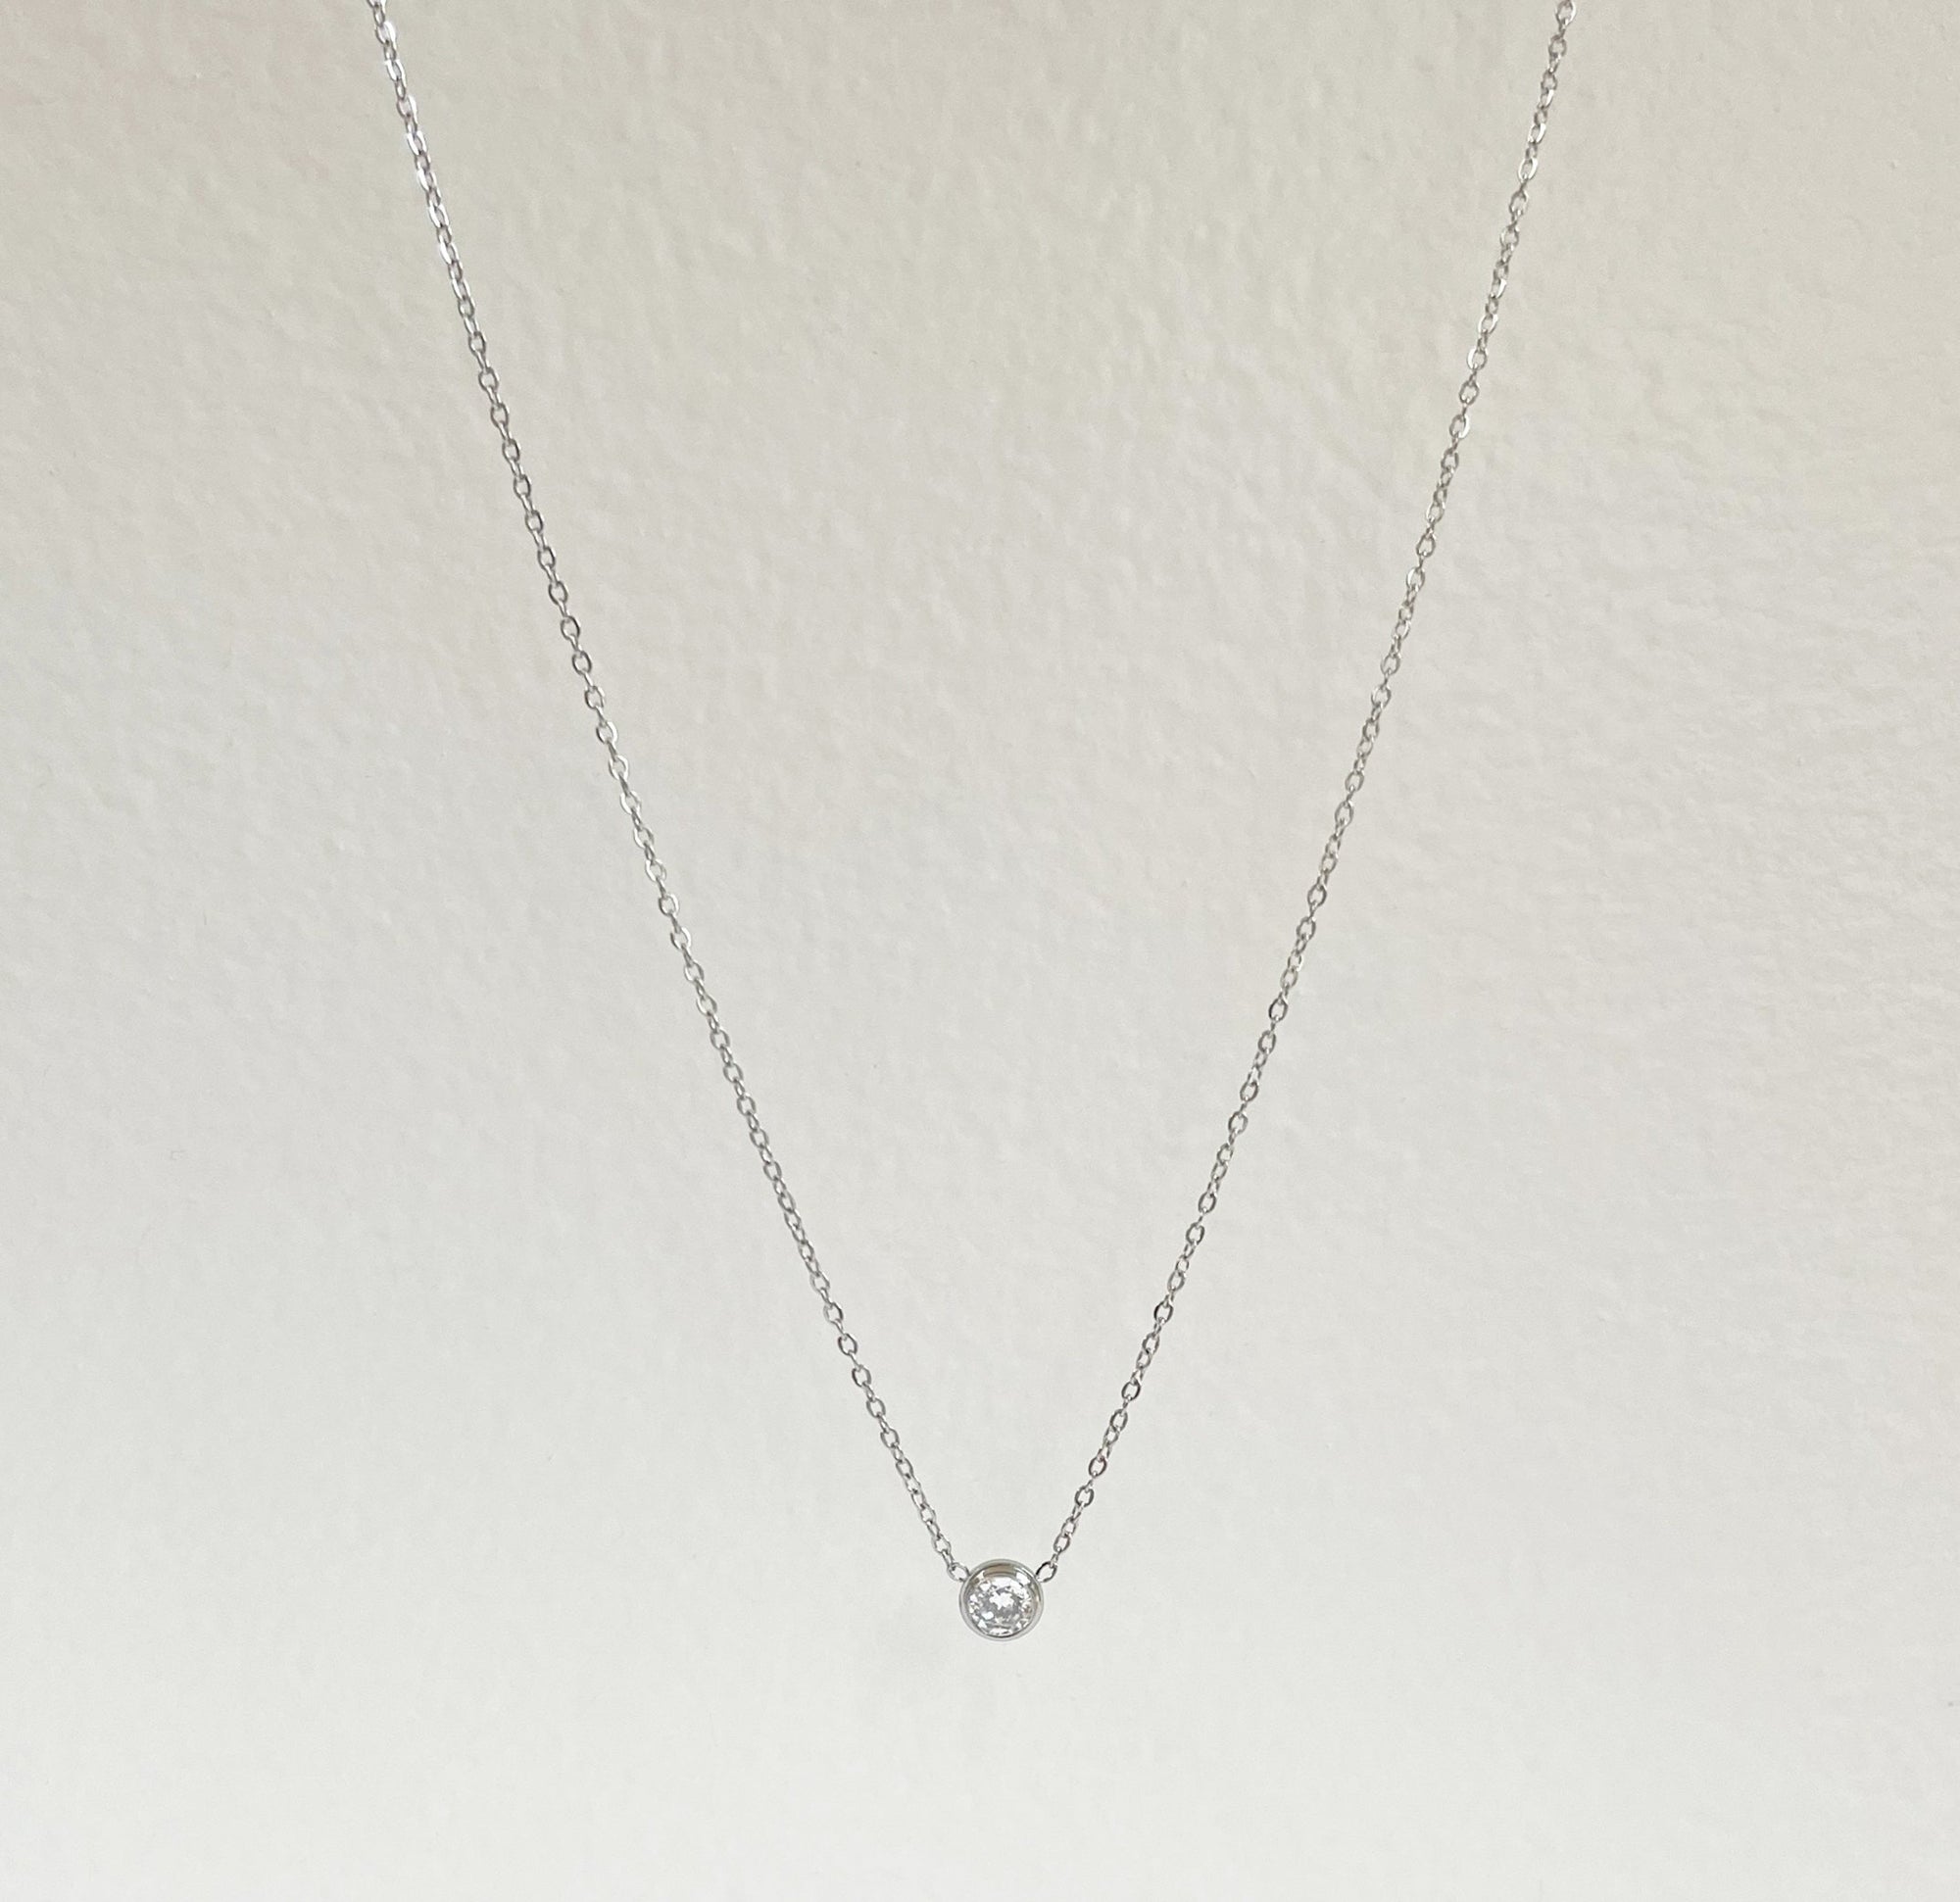 silver pendant necklace waterproof jewelry